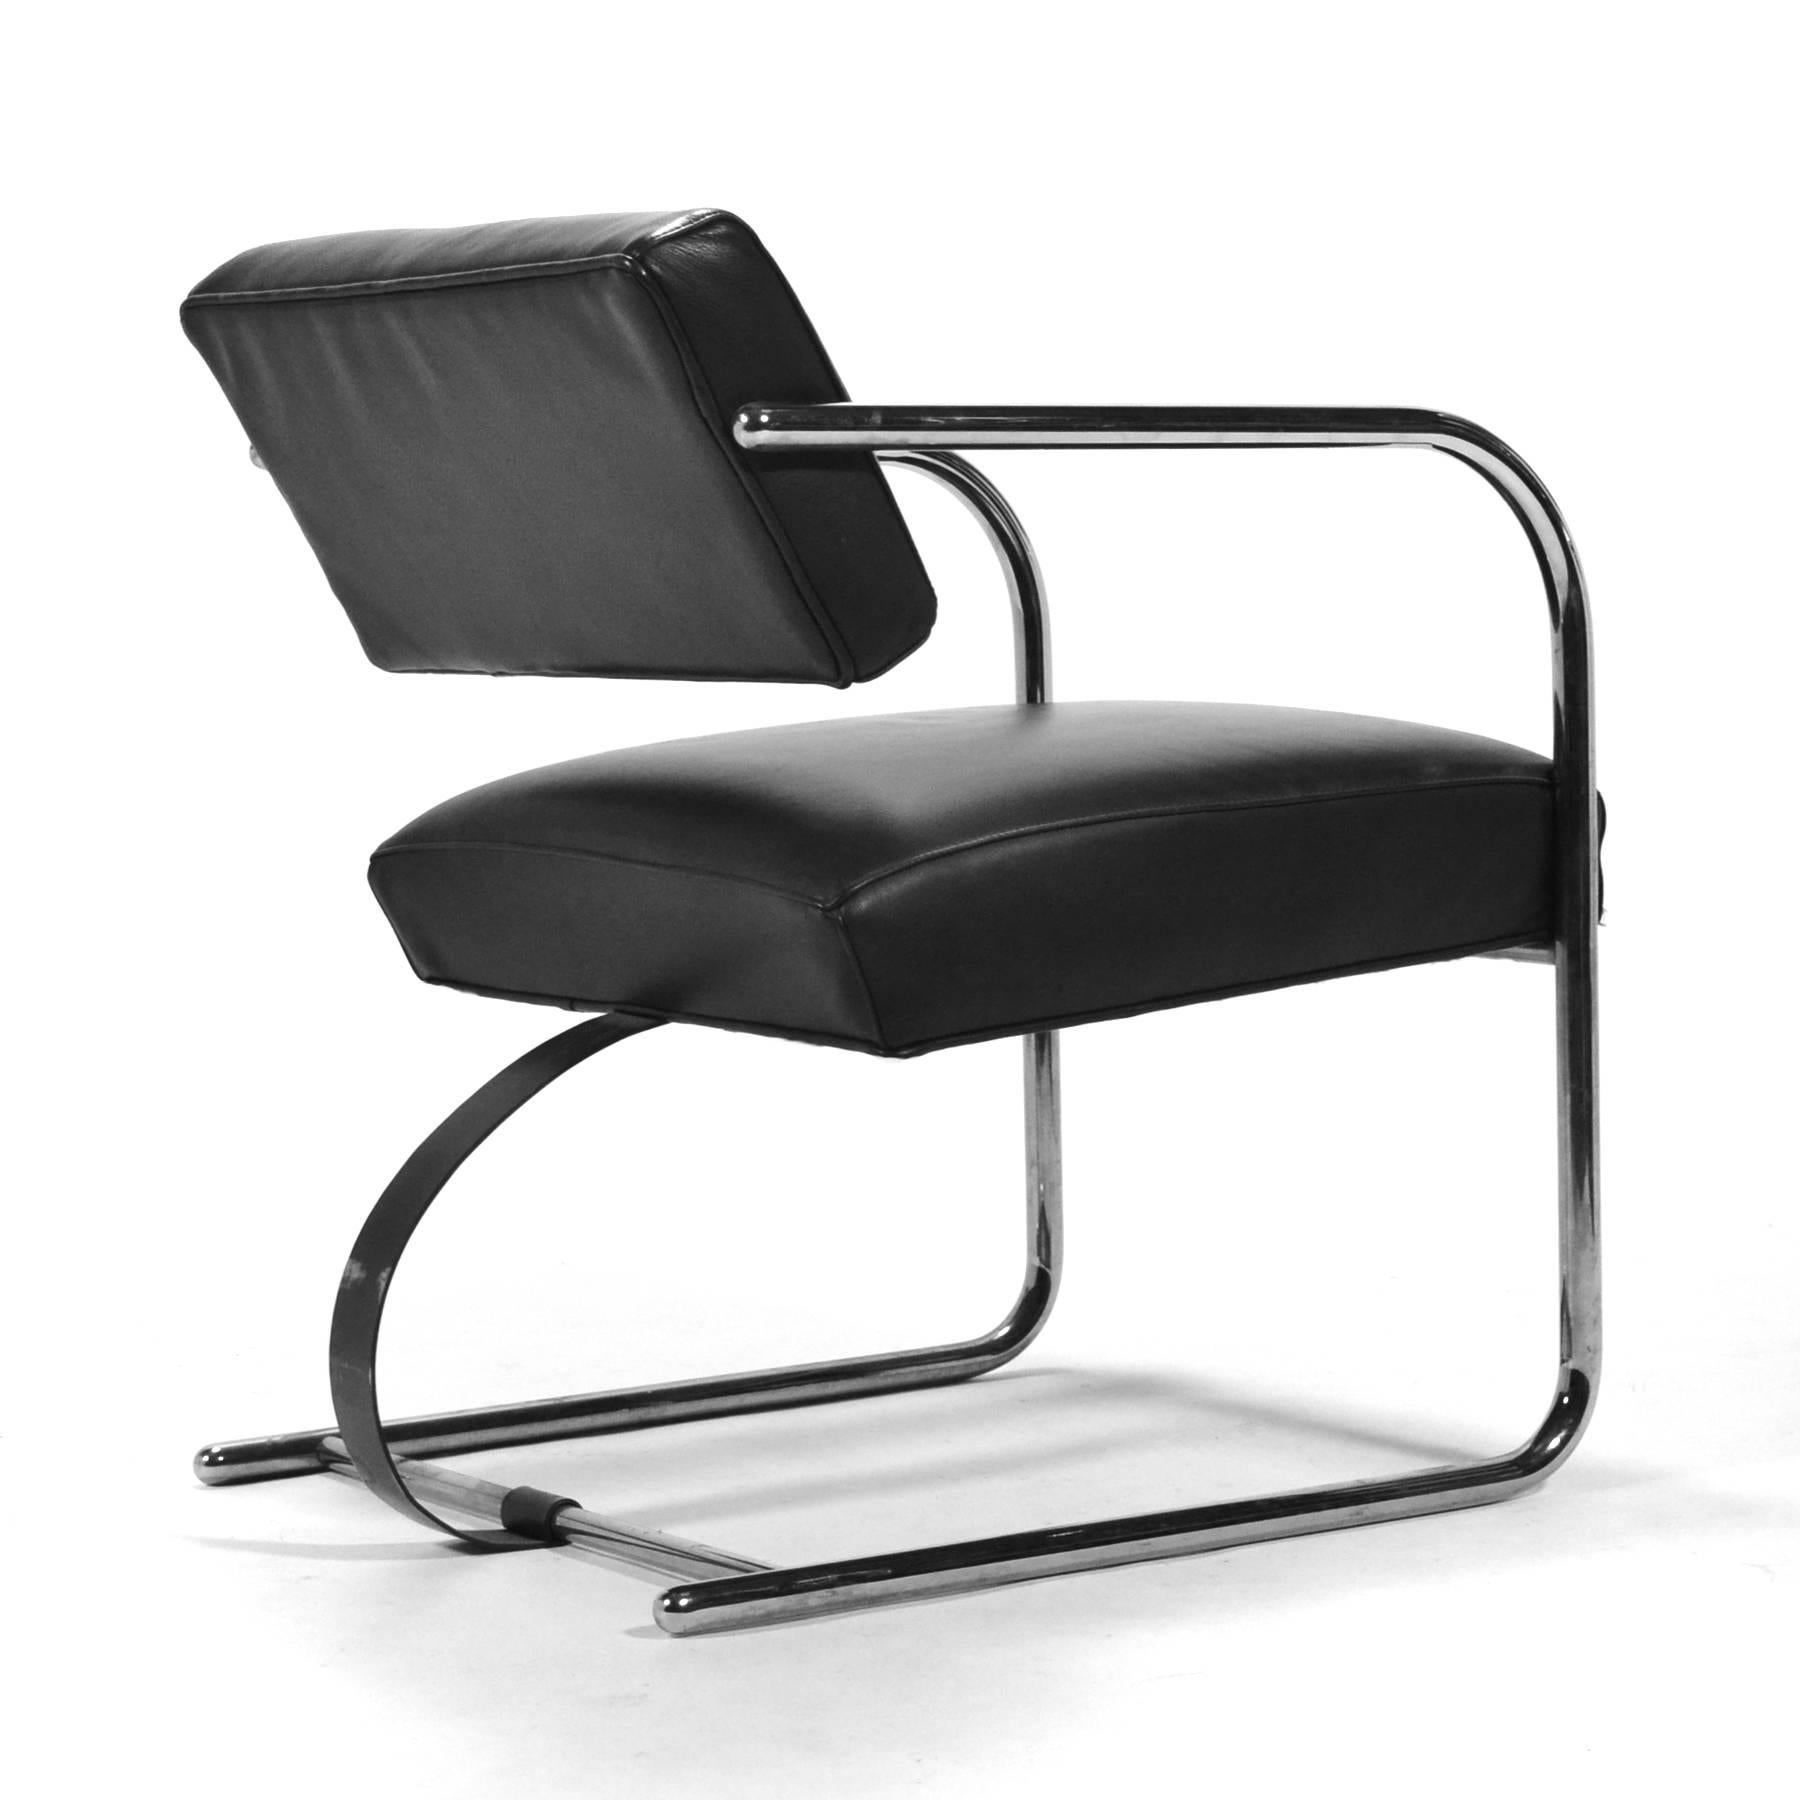 Steel Richard Neutra Lounge Chair